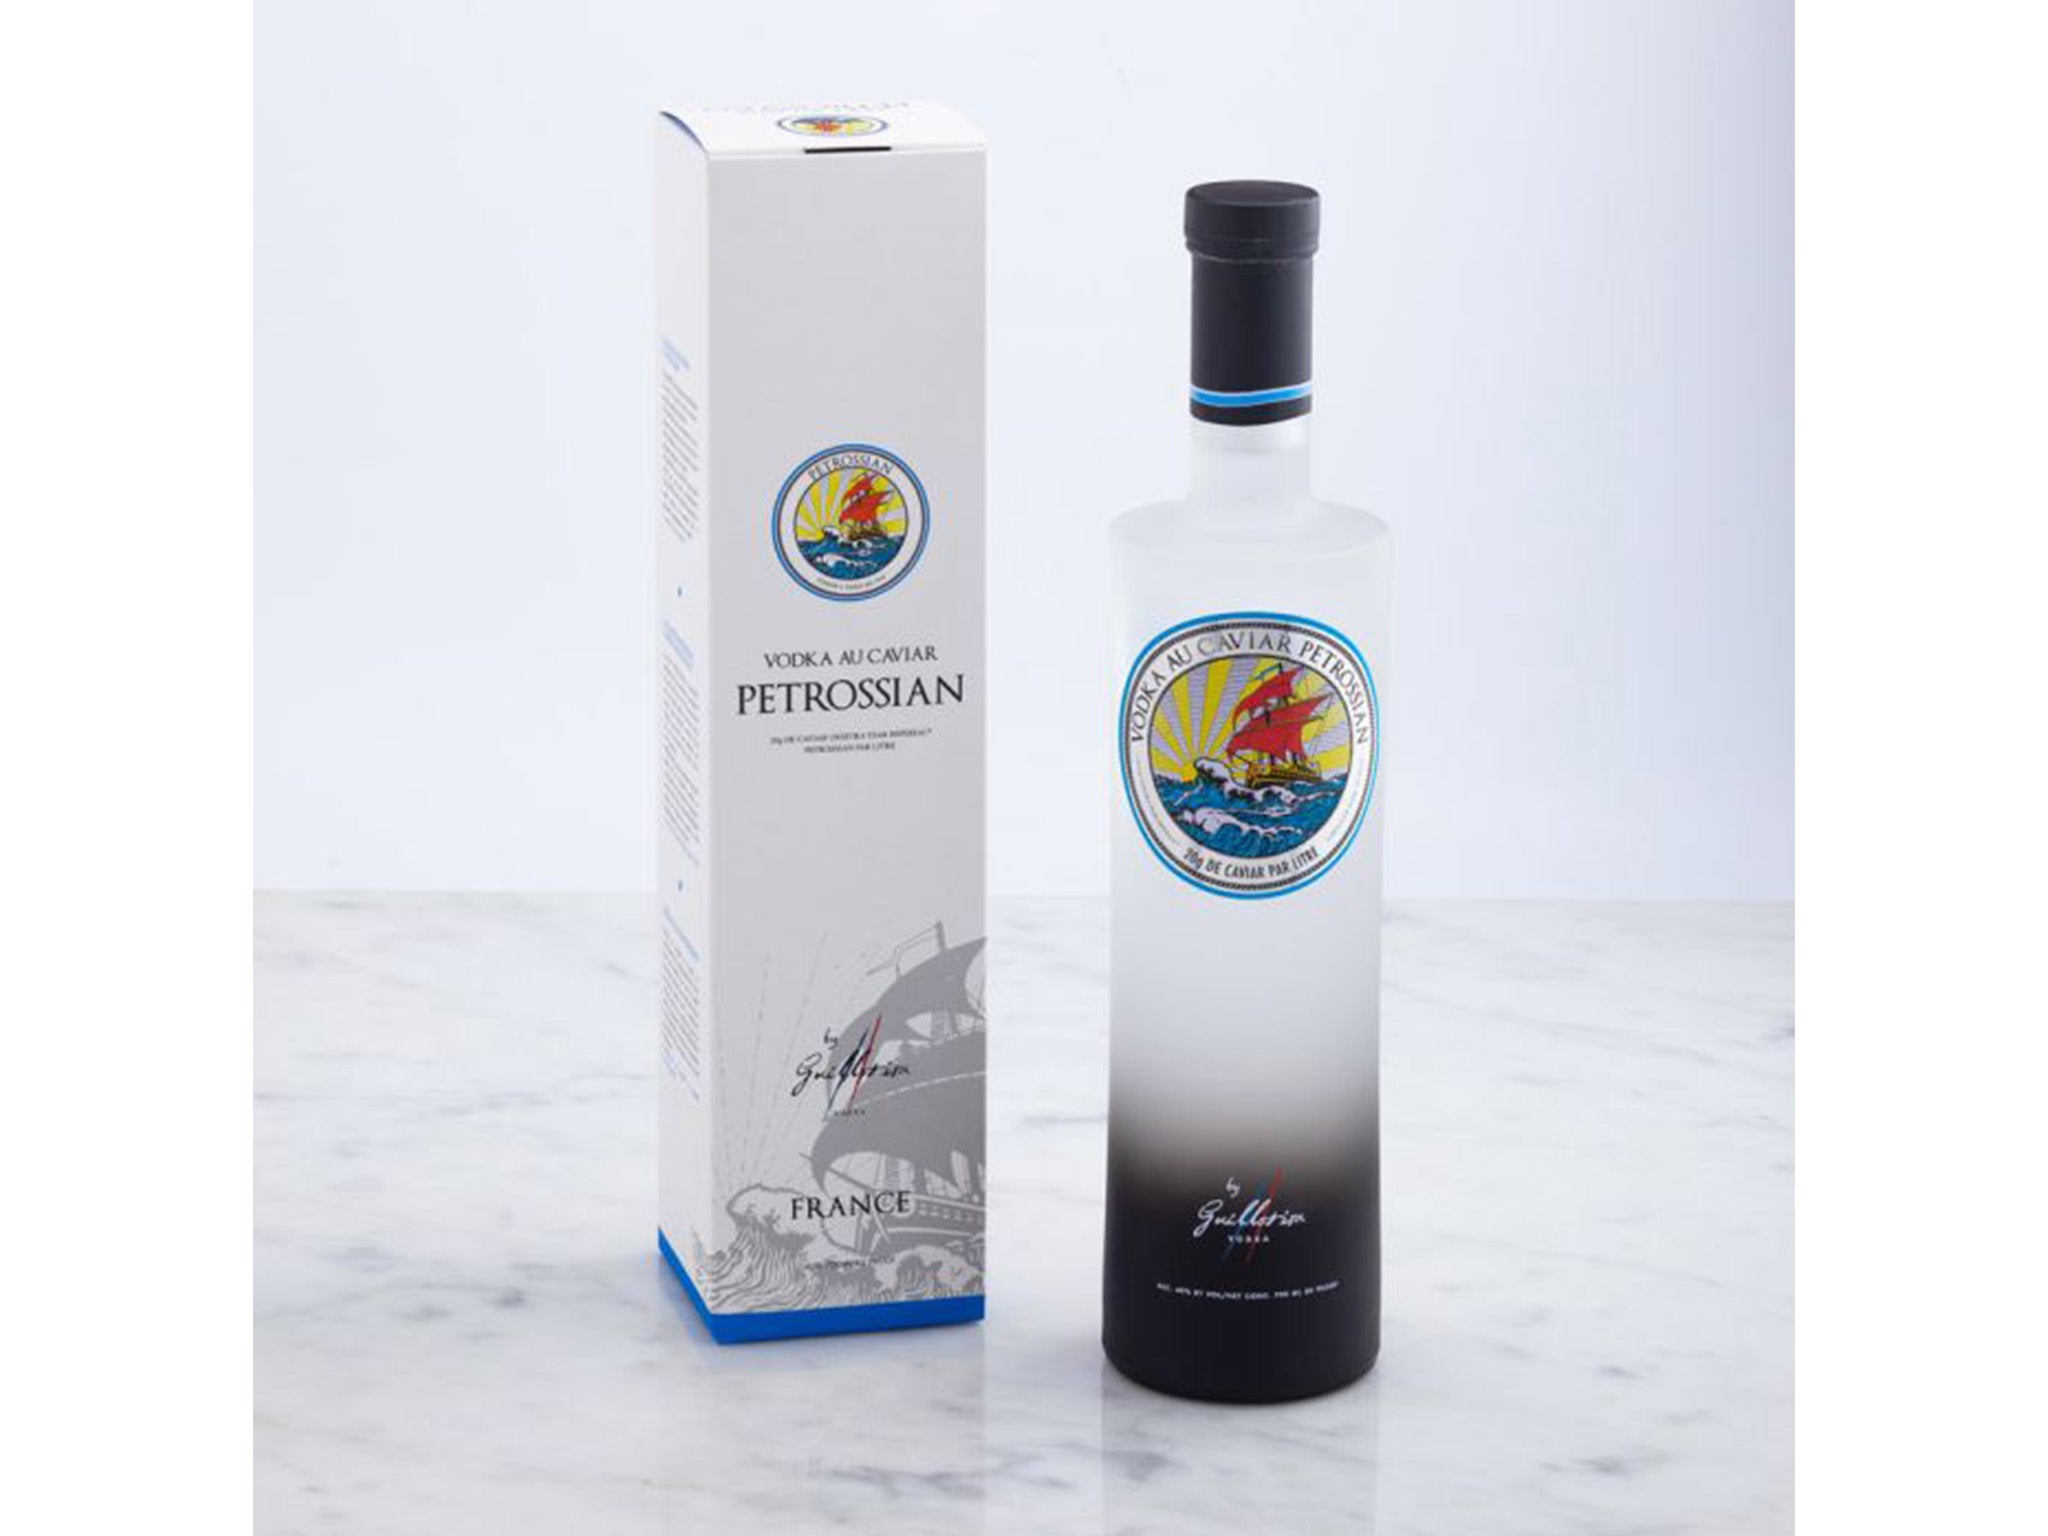 Petrossian caviar vodka .jpg